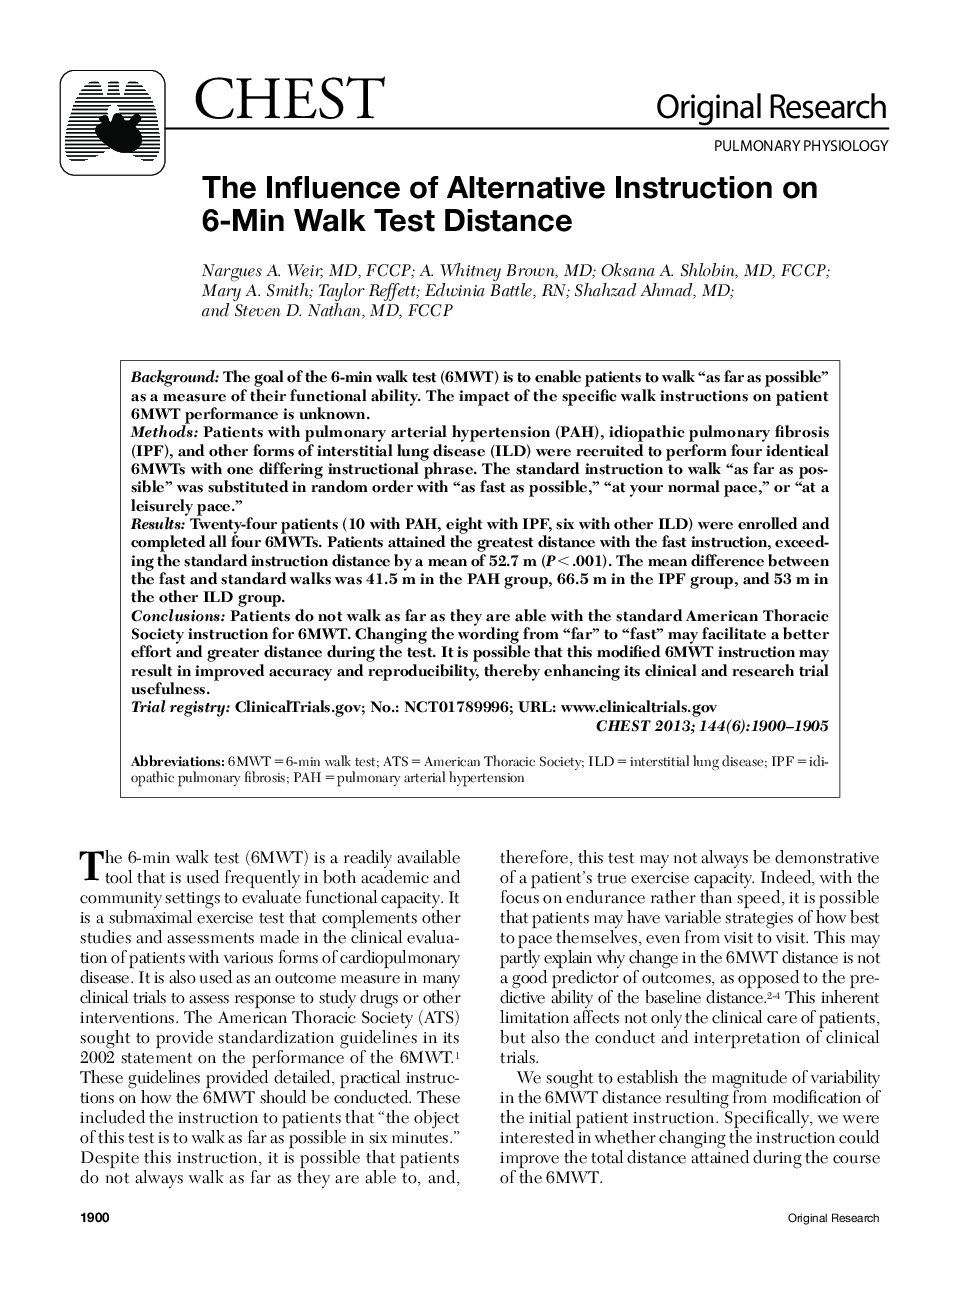 The Influence of Alternative Instruction on 6-Min Walk Test Distance 